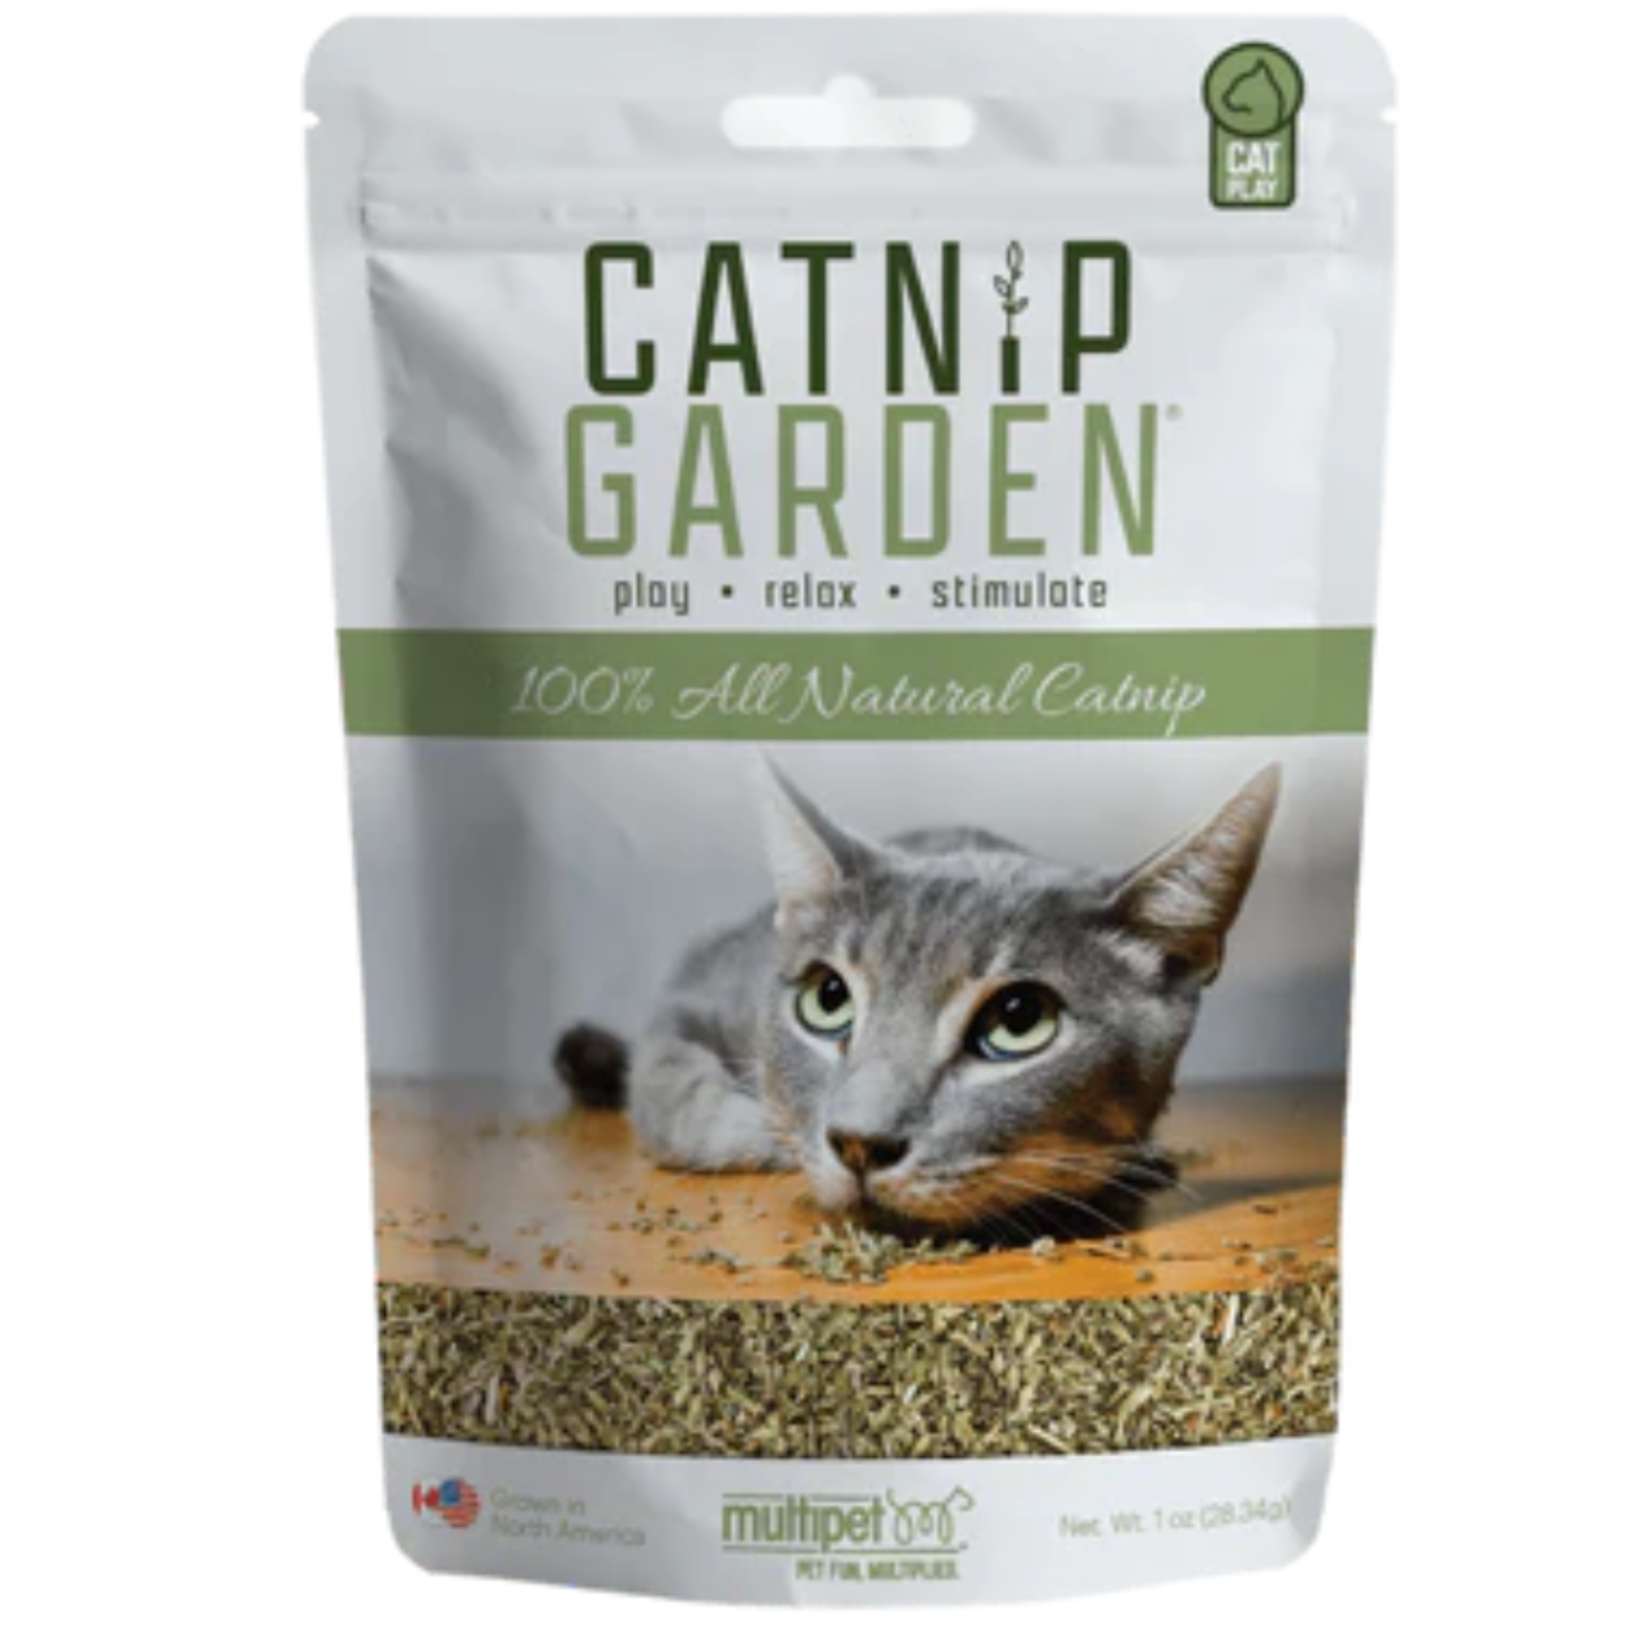 Catnip Garden 1 oz